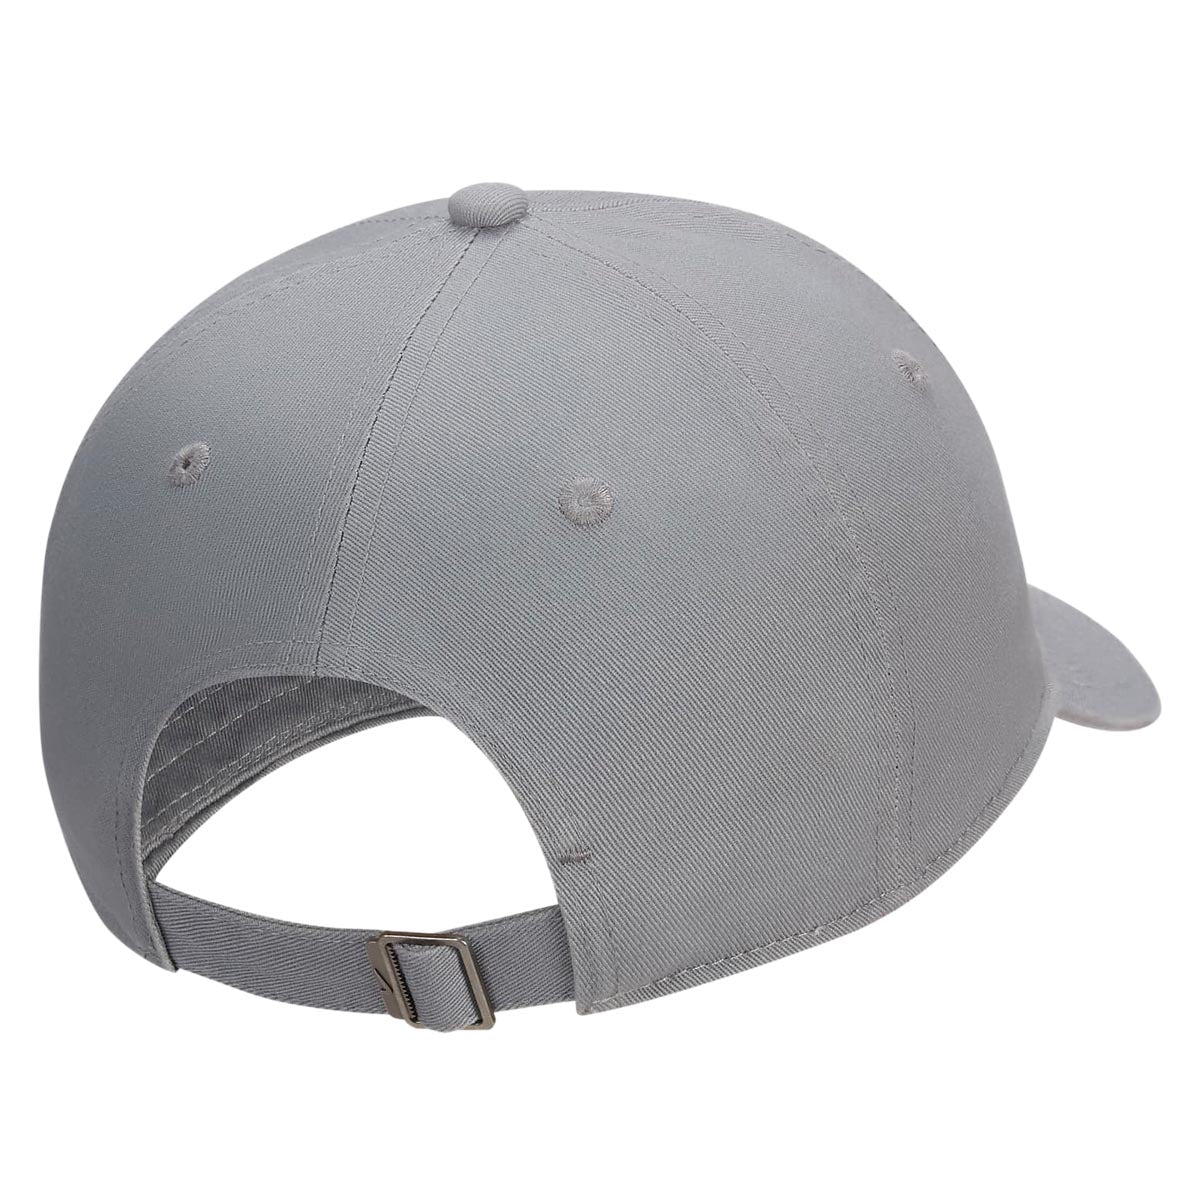 Nike SB Futbol Club Hat - Particle Grey/White - MD/LG image 2